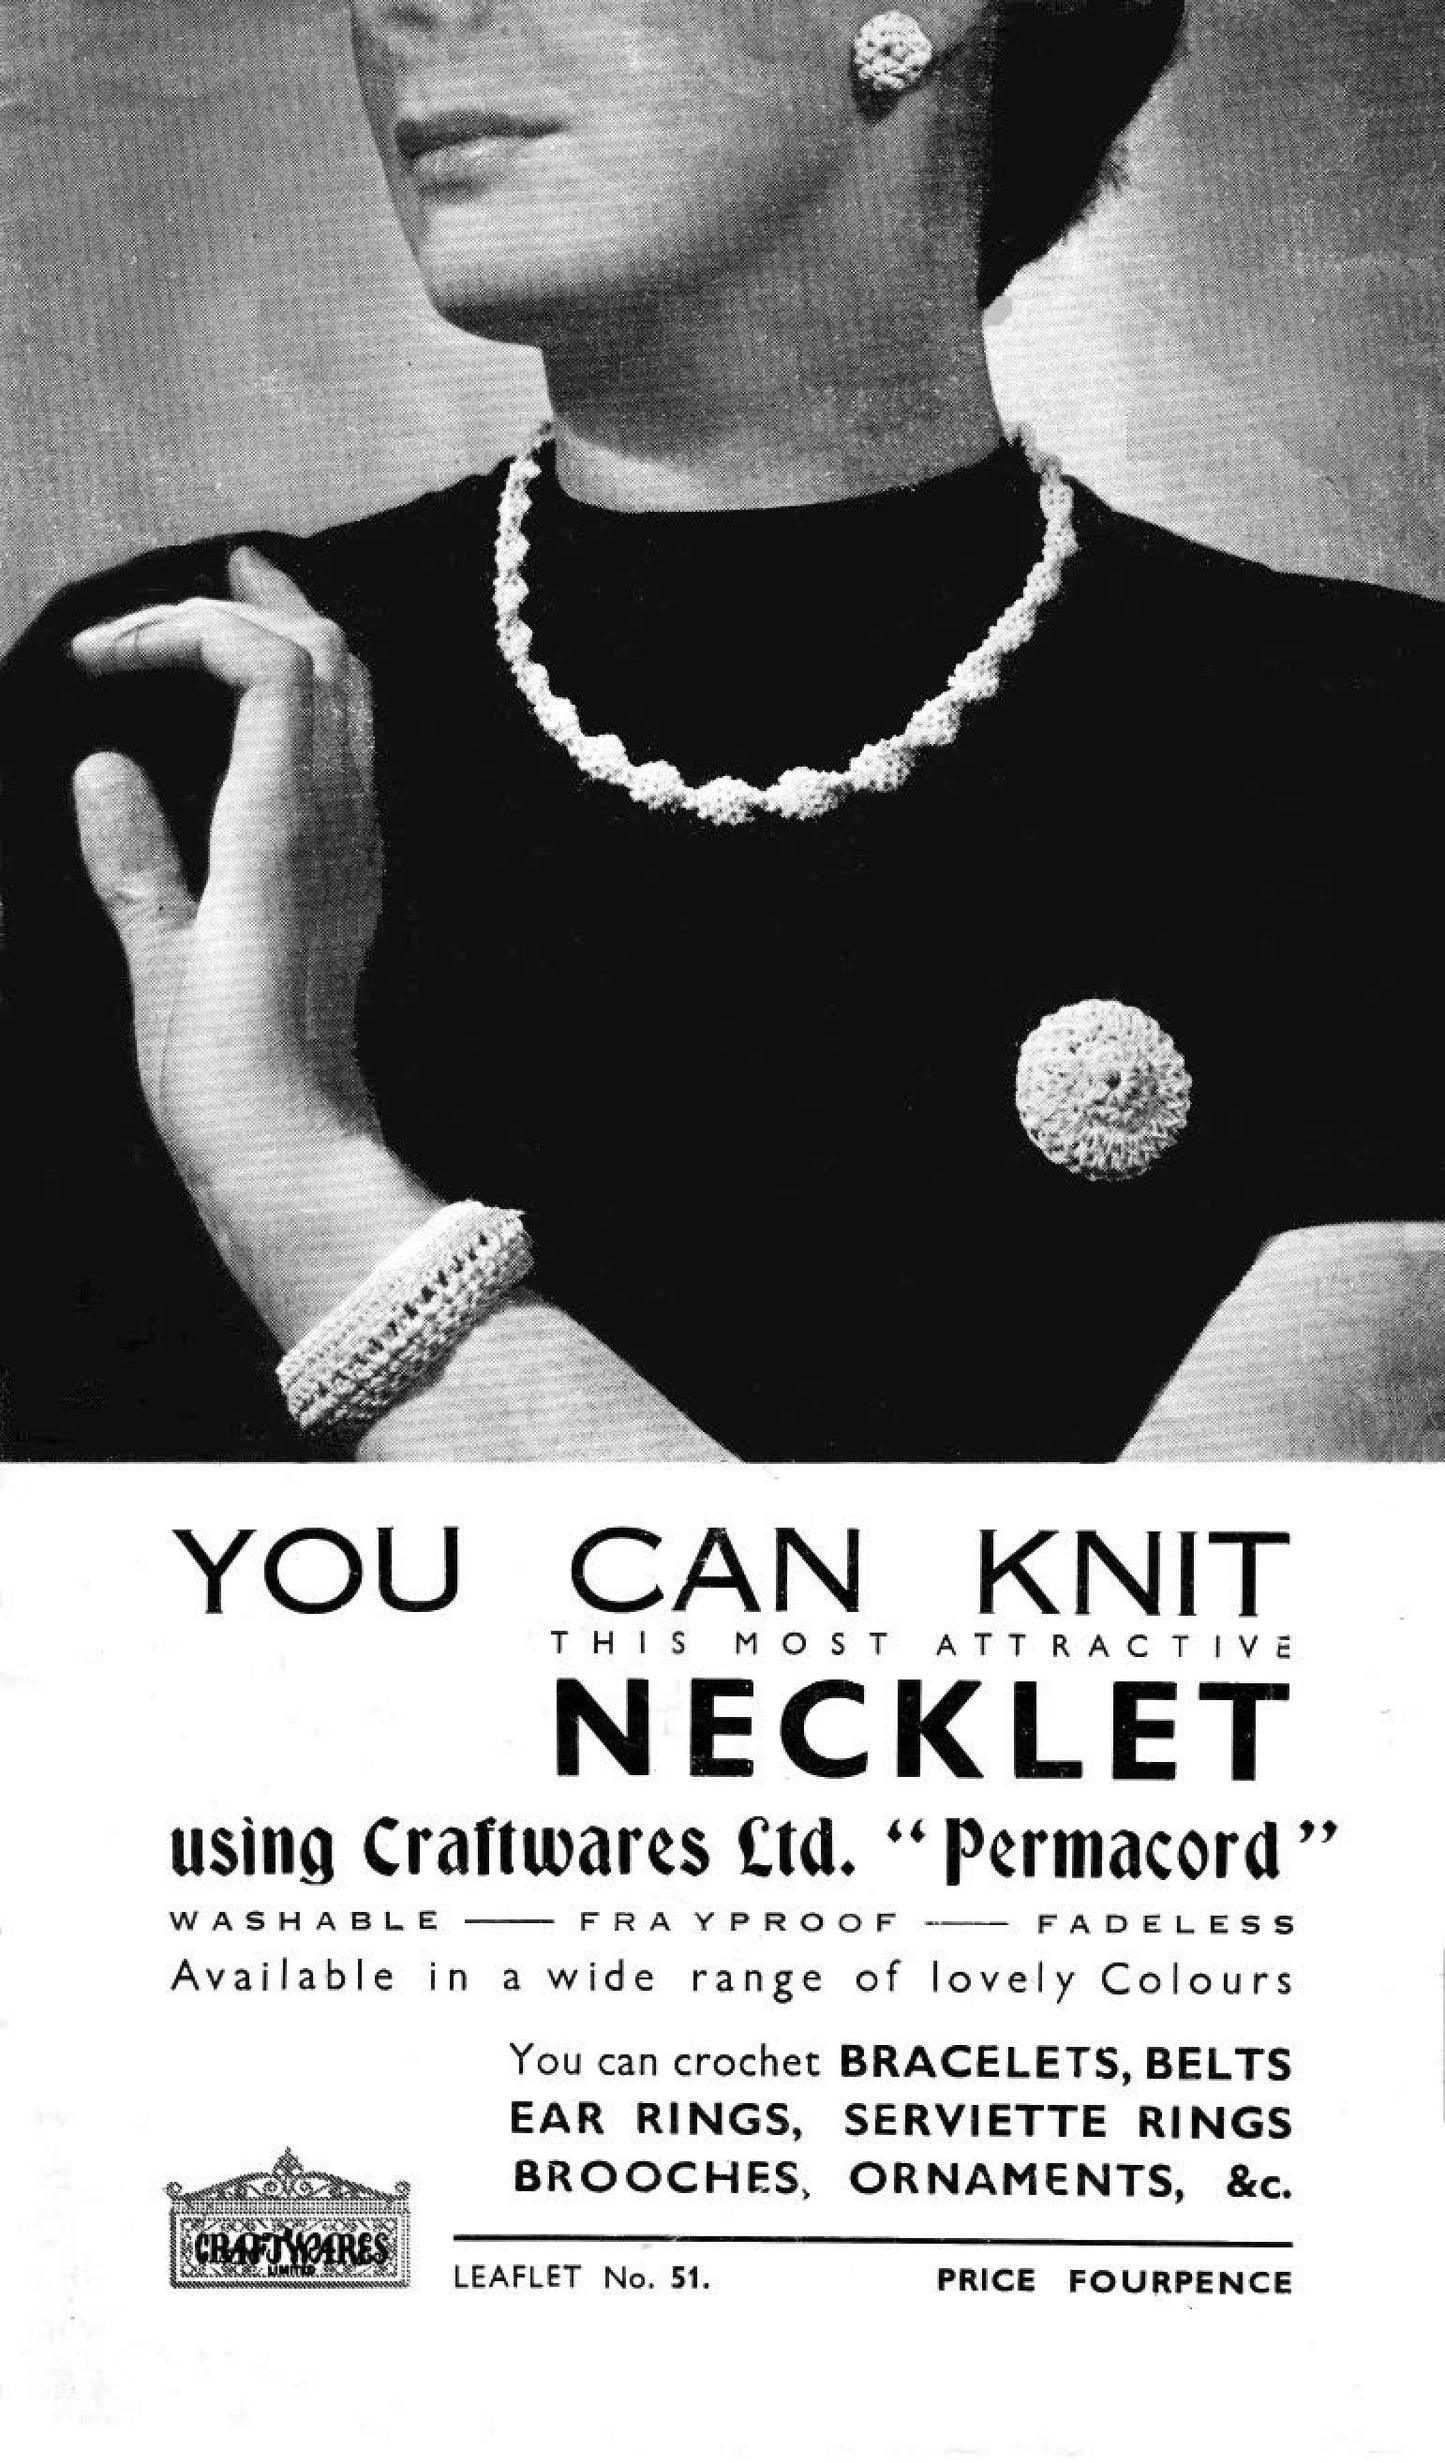 40s/50s Jewllery - Bracelets, Belt, Ear Rings, Brooches, Necklets. Crochet and Knitting Pattern, Leaflet 51